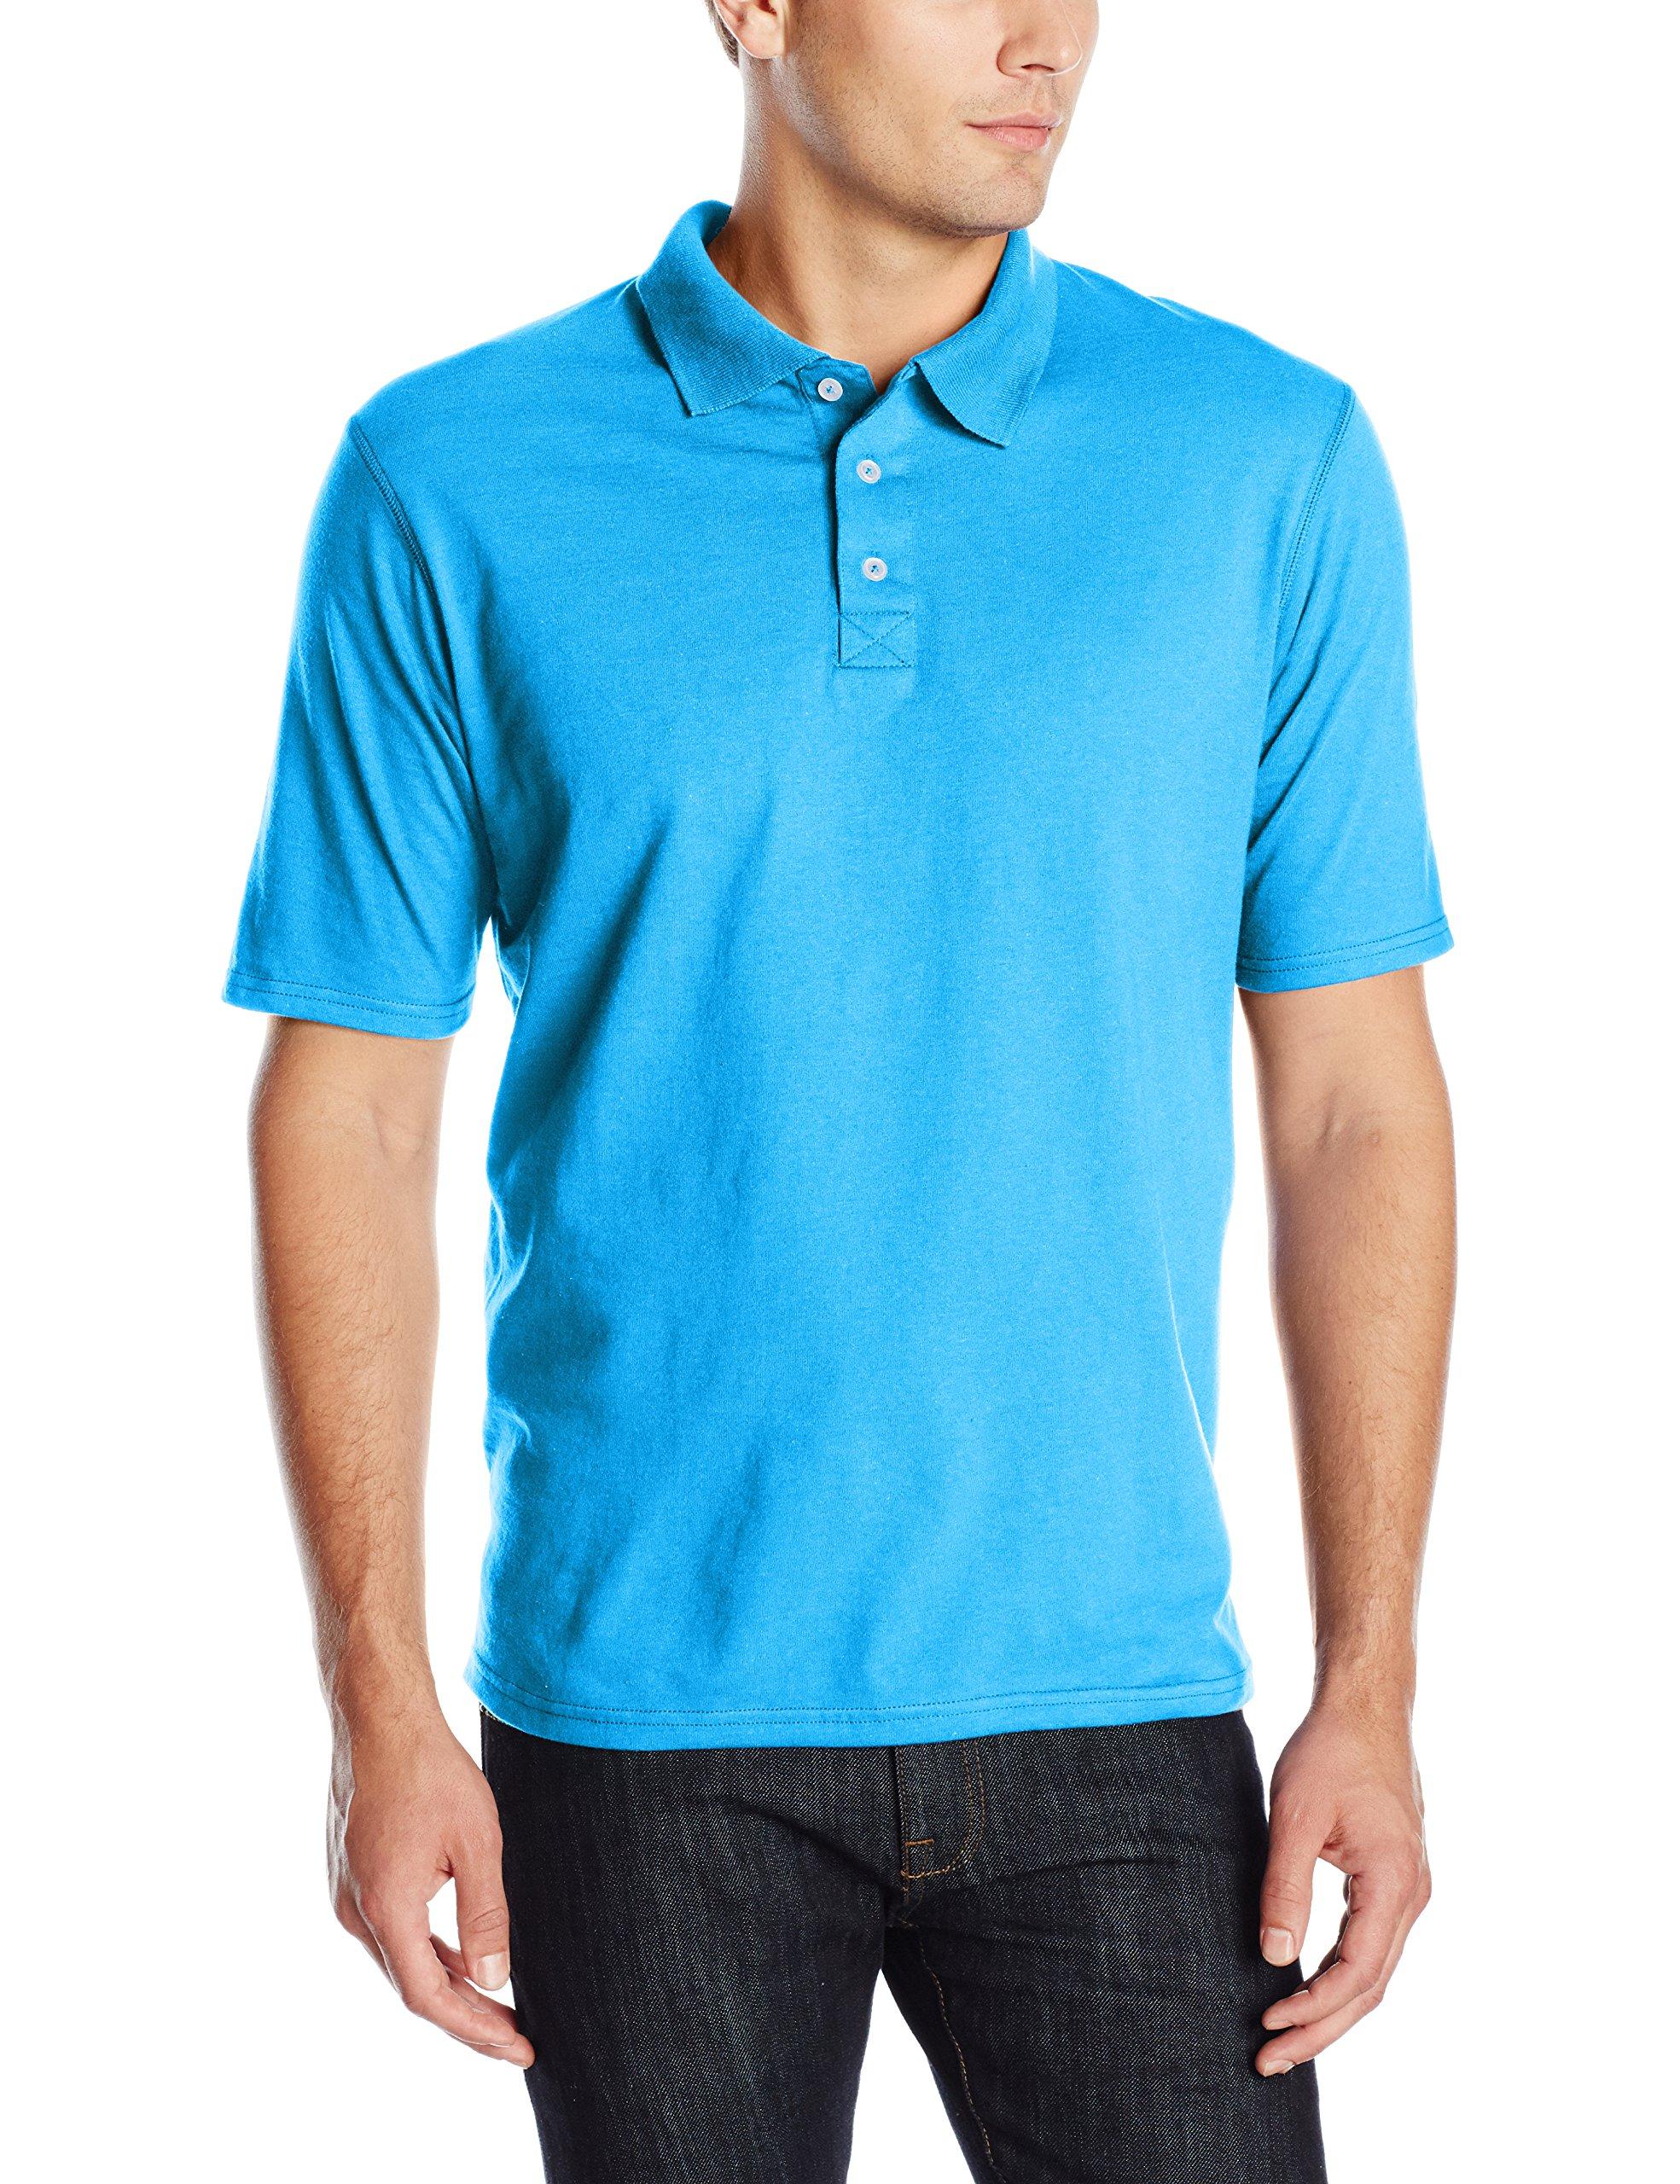 Hanes Cotton Mens X temp Performance  Polo  Shirt  neon Blue 